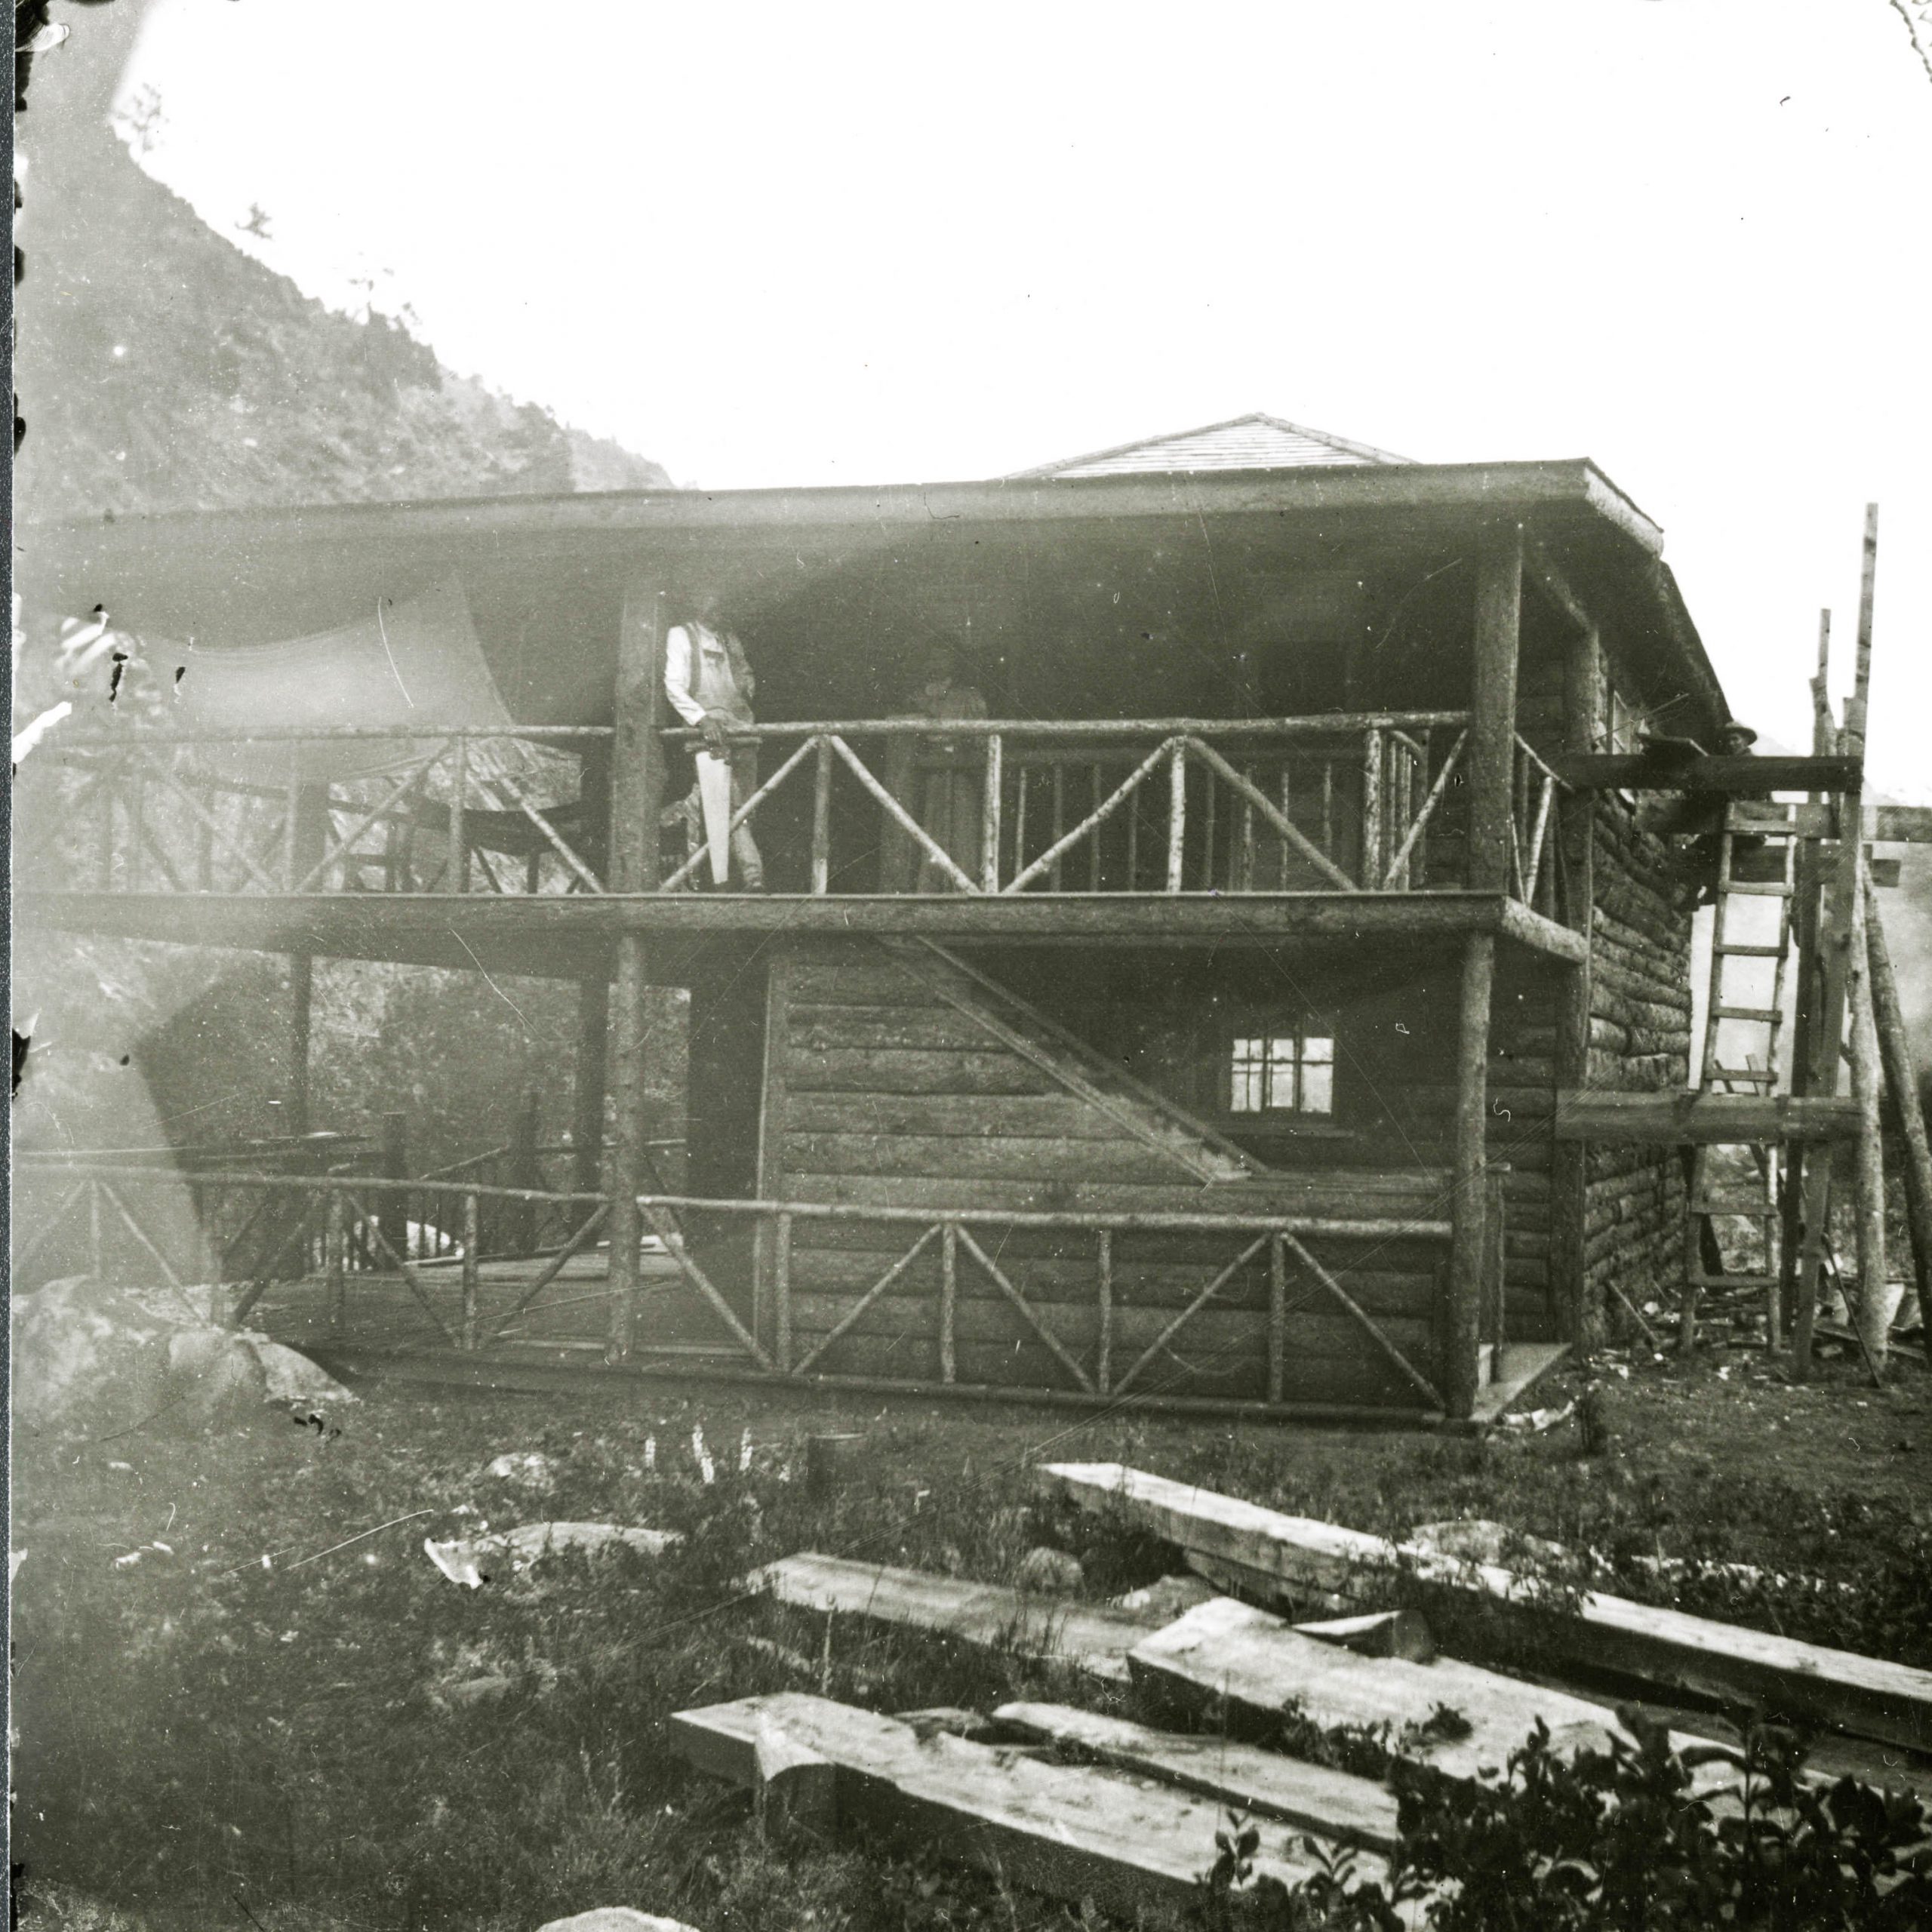 Idlewild Lodge - idlewildlodge.github.io - Circa 1910 - Idlewild in Big Thompson Canyon - Fort Collins History